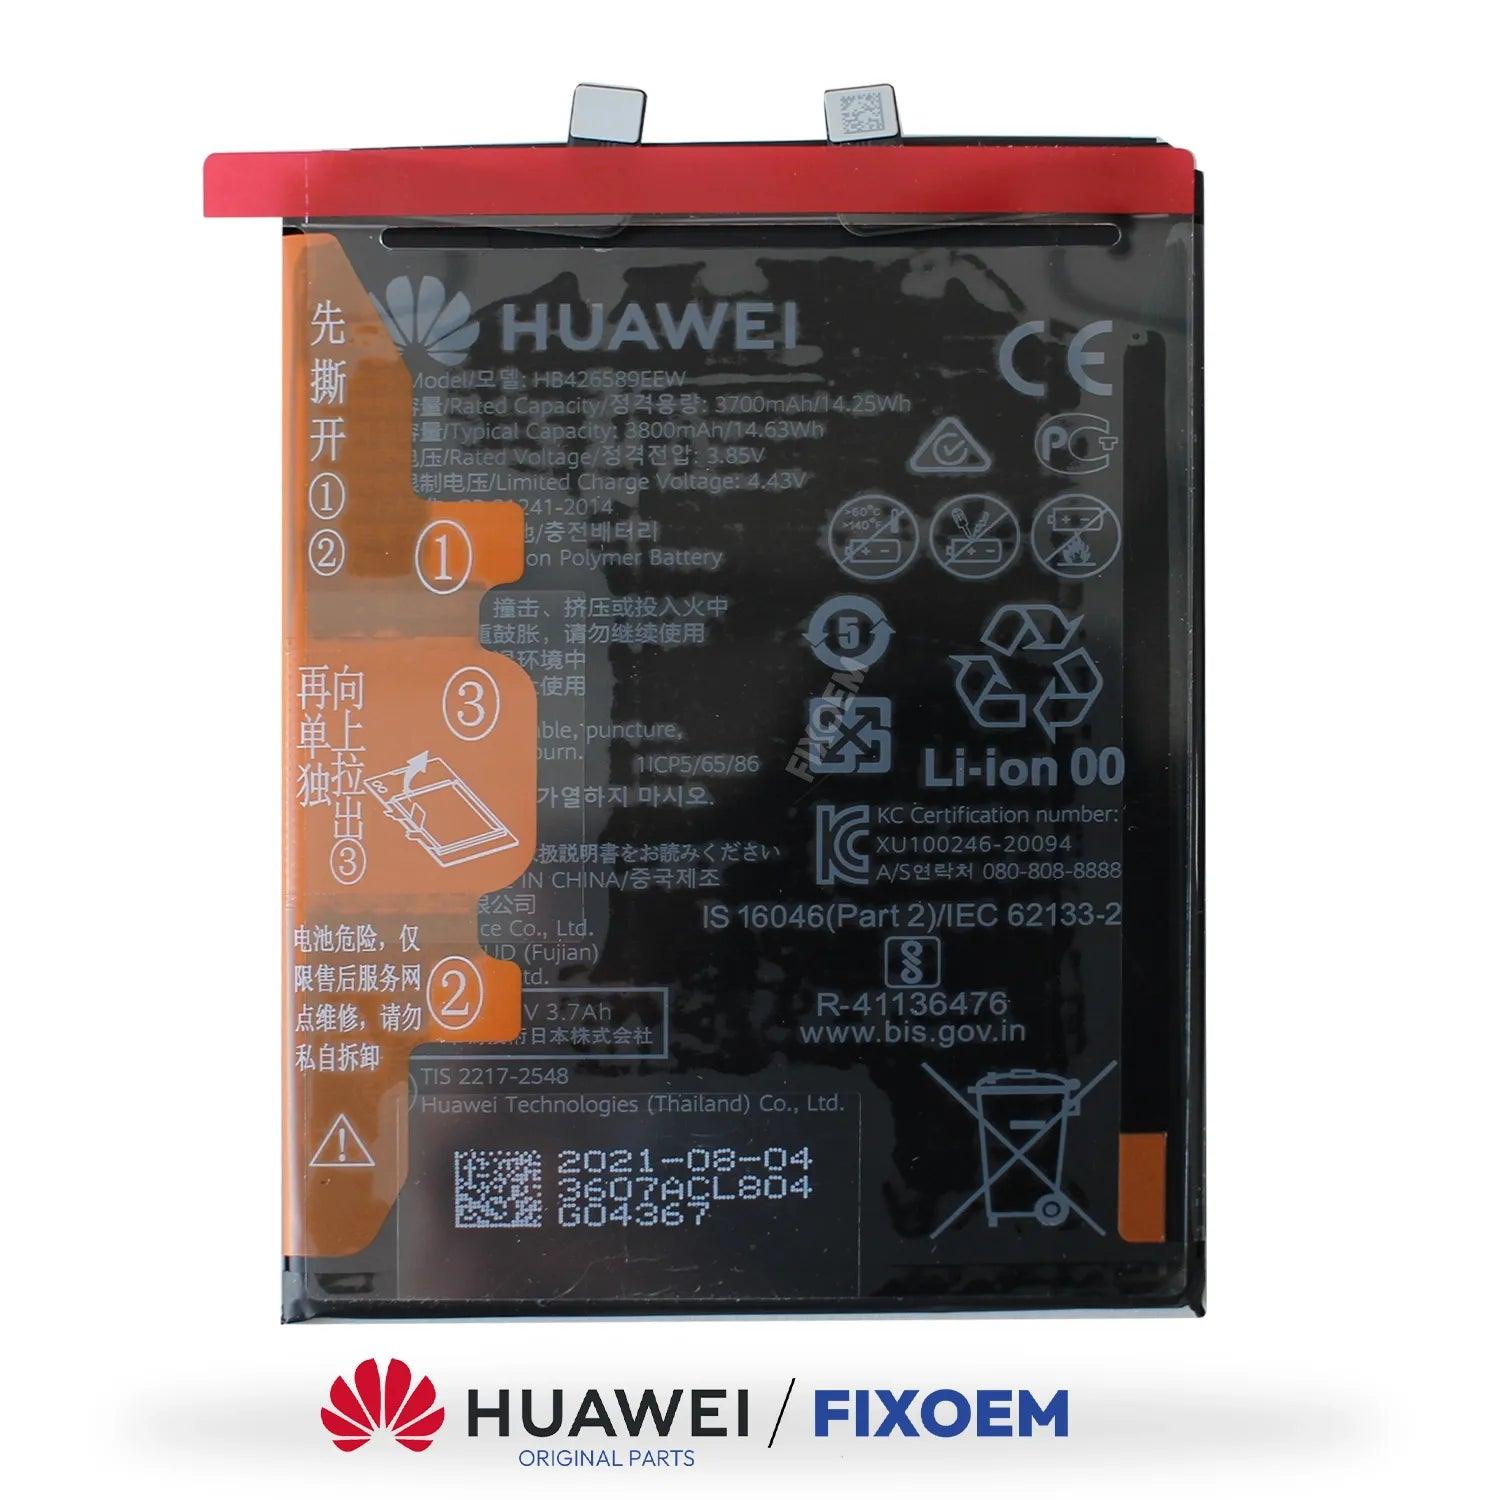 Bateria Huawei Nova 8 HB426589EEW Original |+2,000 reseñas 4.8/5 ⭐